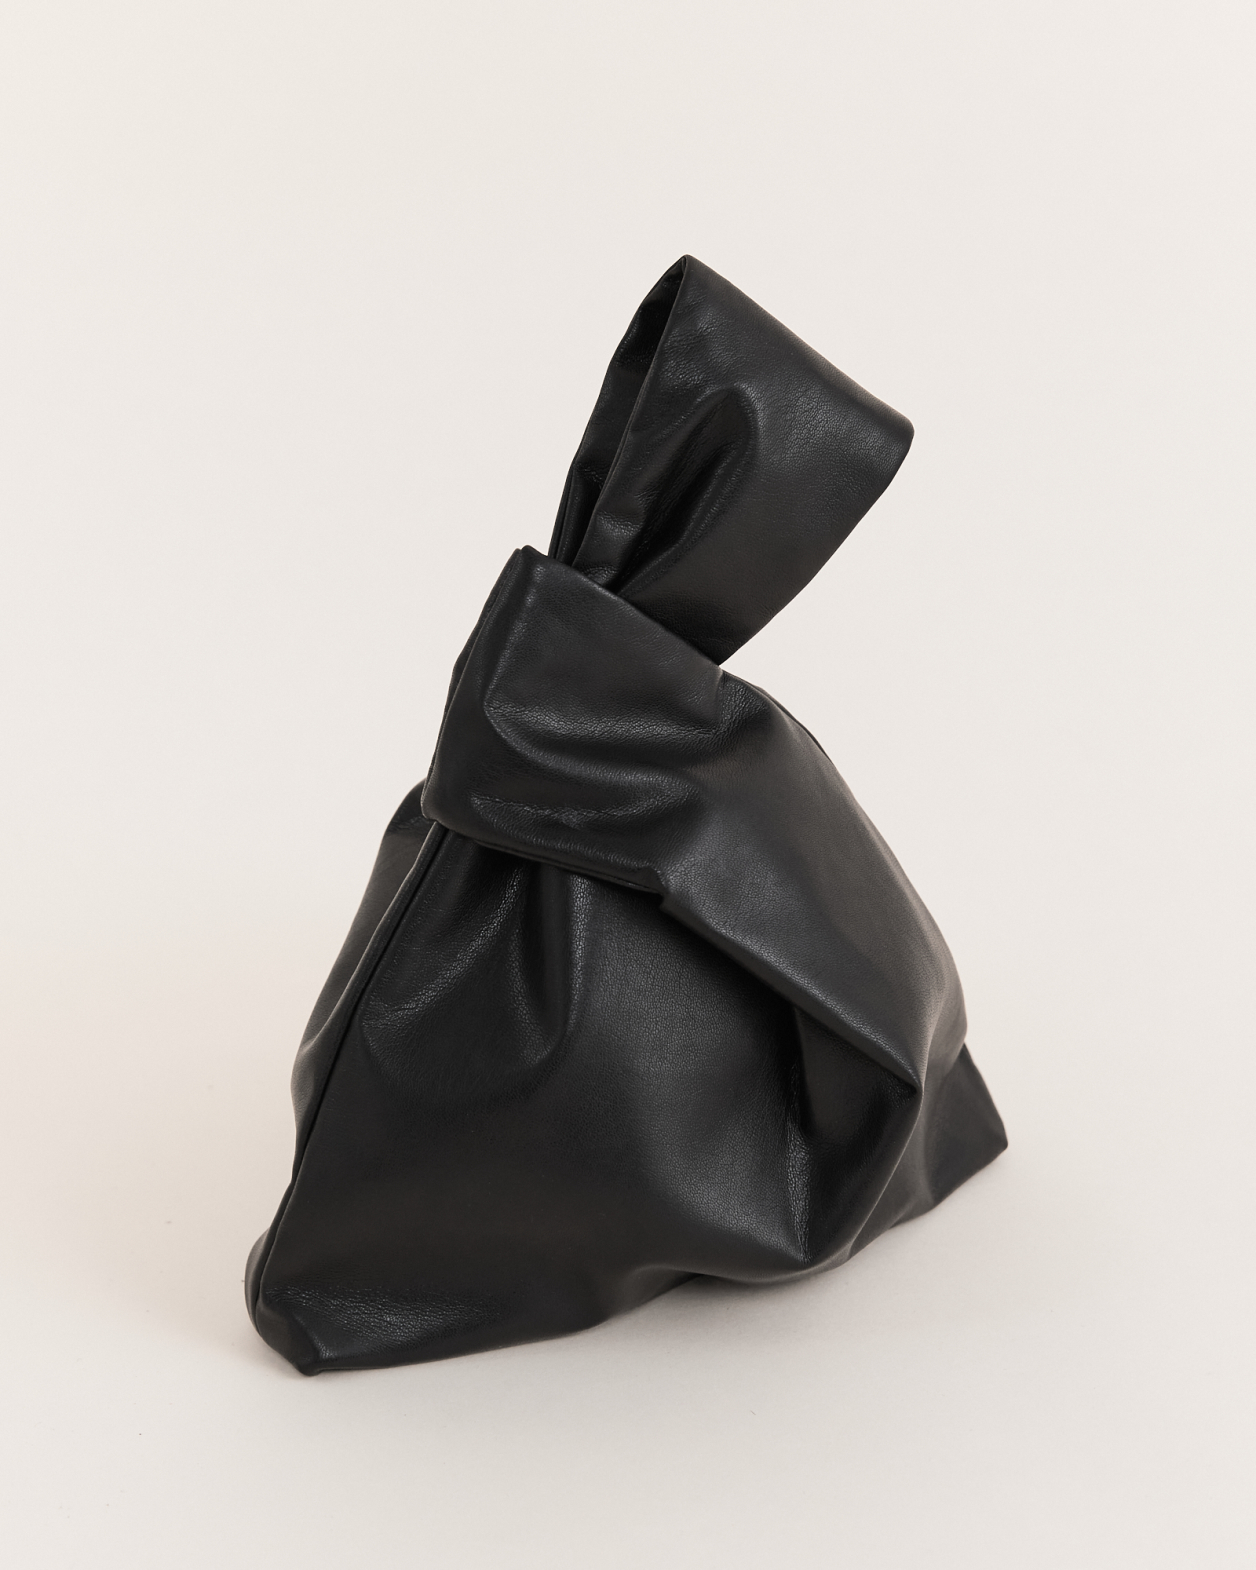 Vegan Leather Knot Bag in BLACK